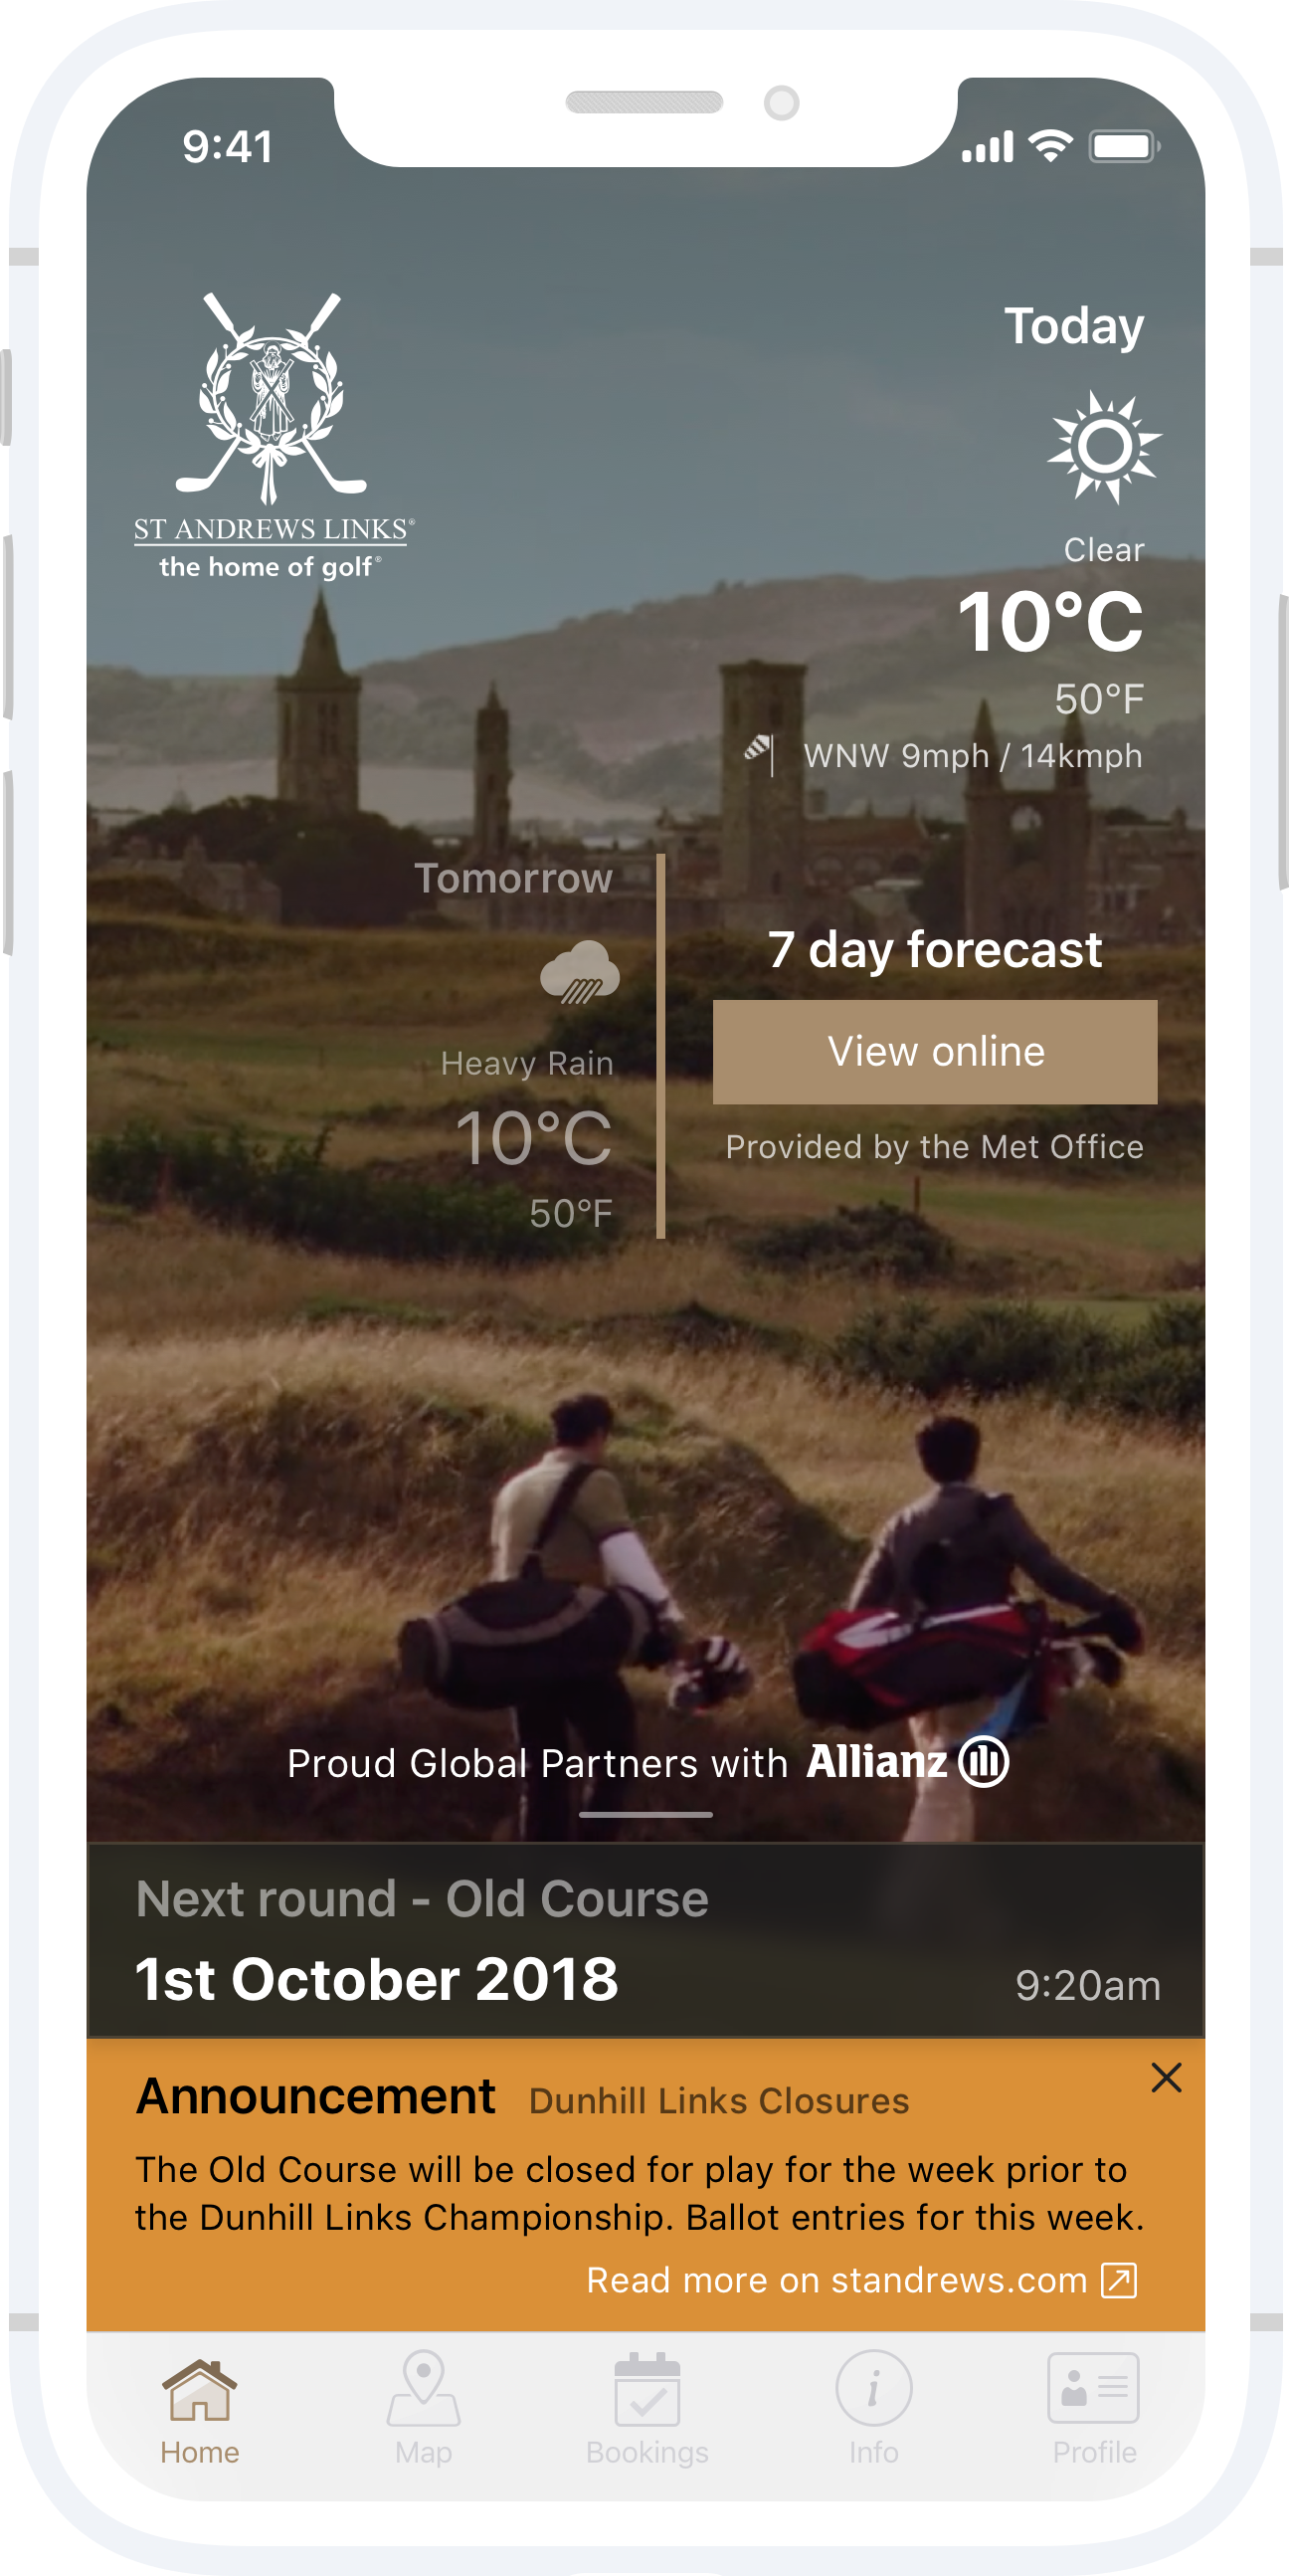 St Andrews links trust app homepage on mobile